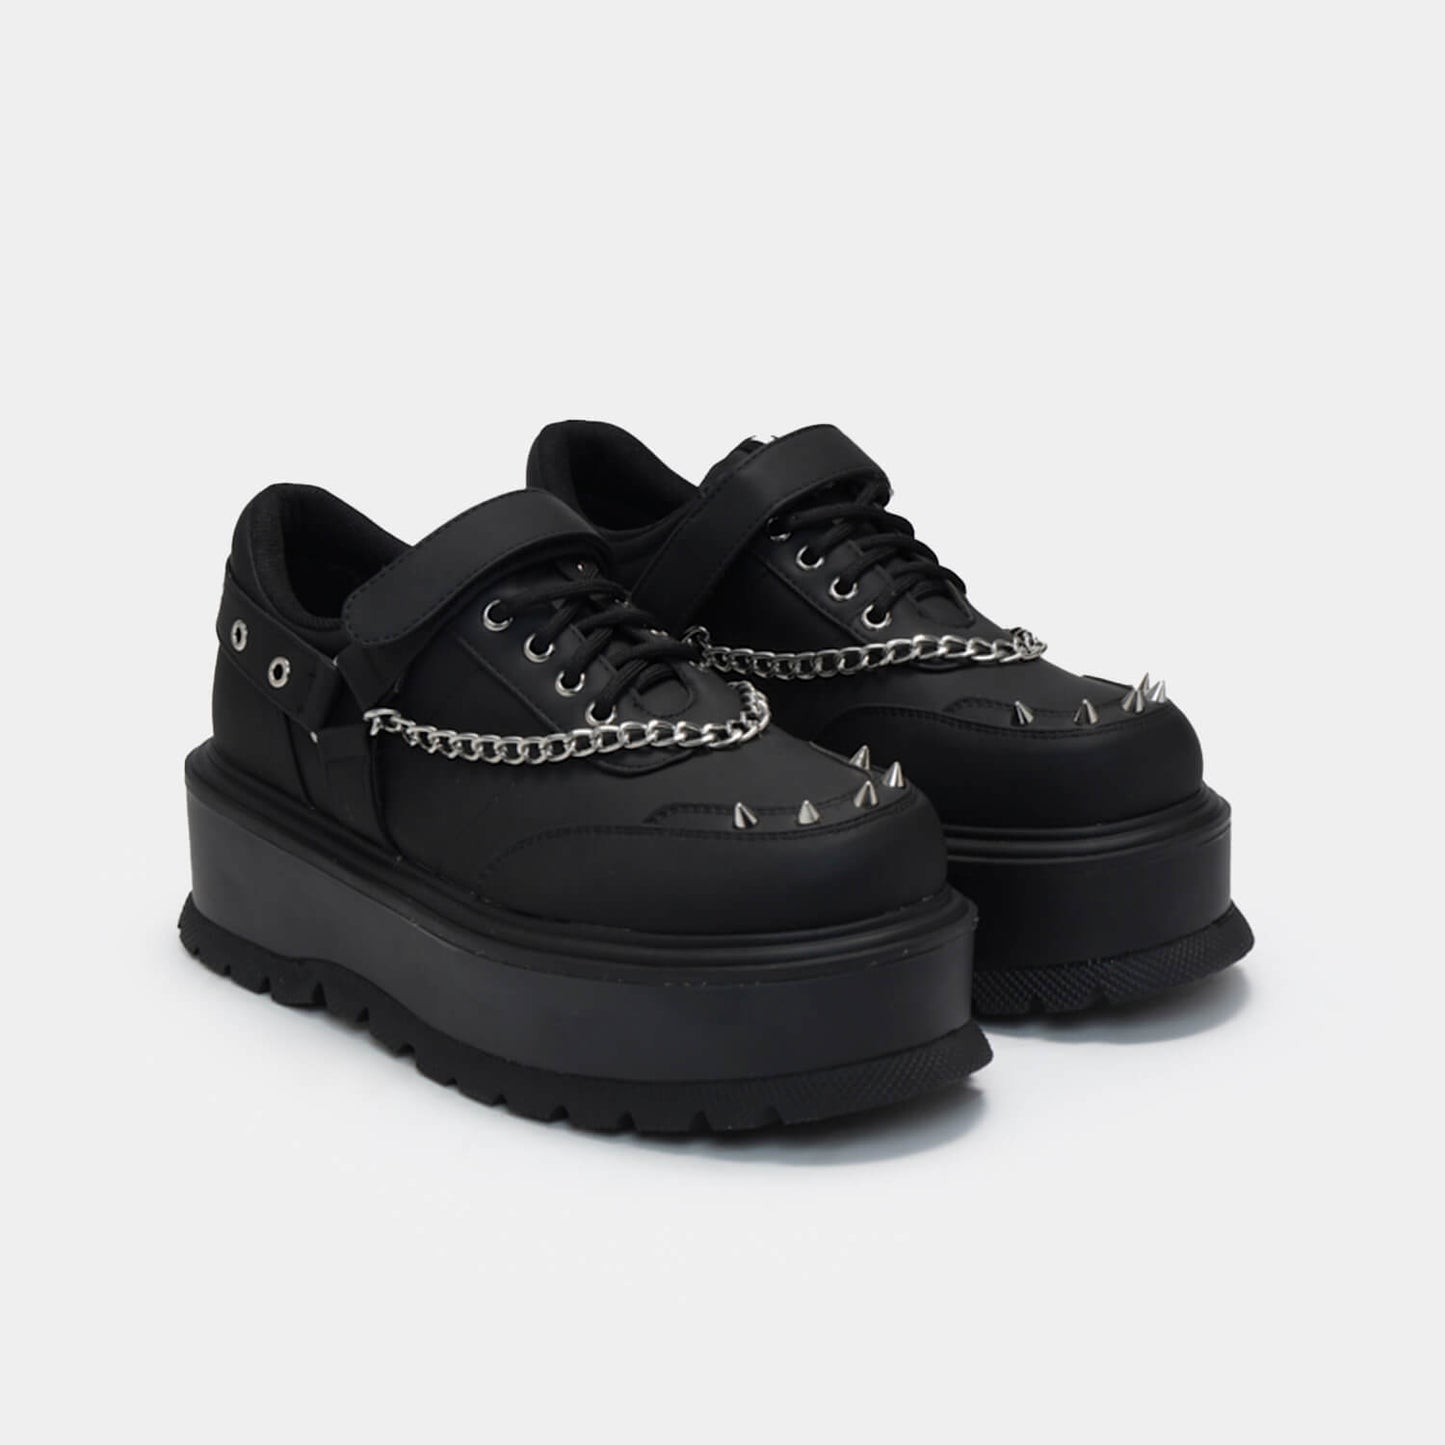 Retrograde Rebel Men's Black Platform Shoes - Shoes - KOI Footwear - Black - Three-Quarter View